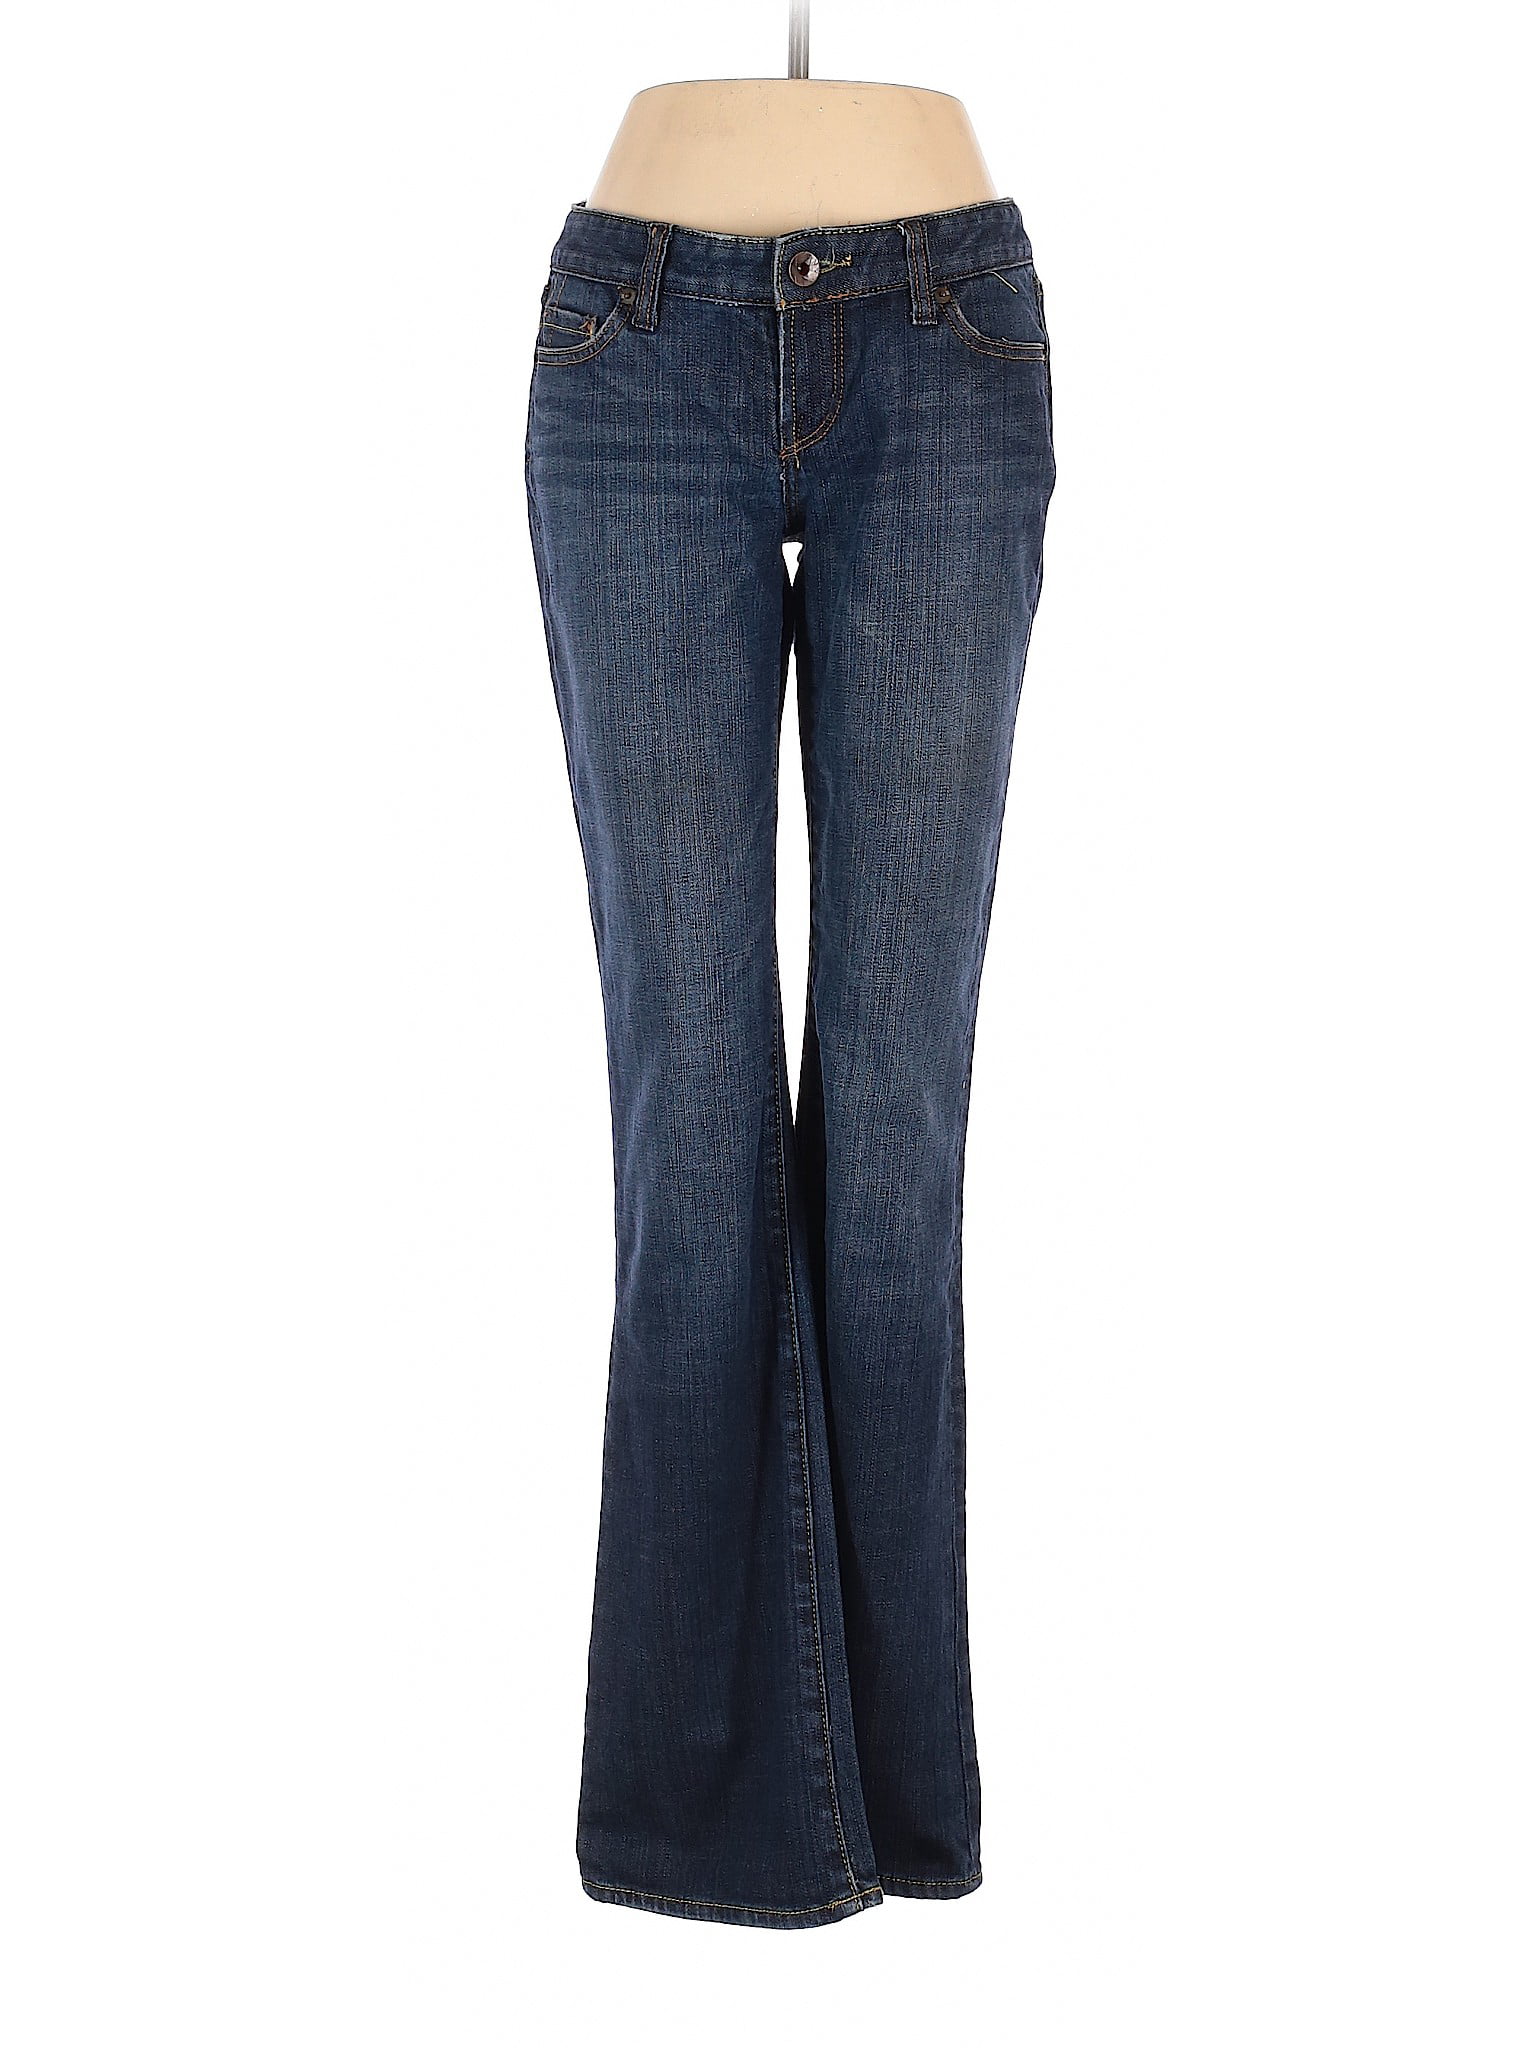 Pre-Owned X2 Women's Size 4 Tall Jeans - Walmart.com - Walmart.com